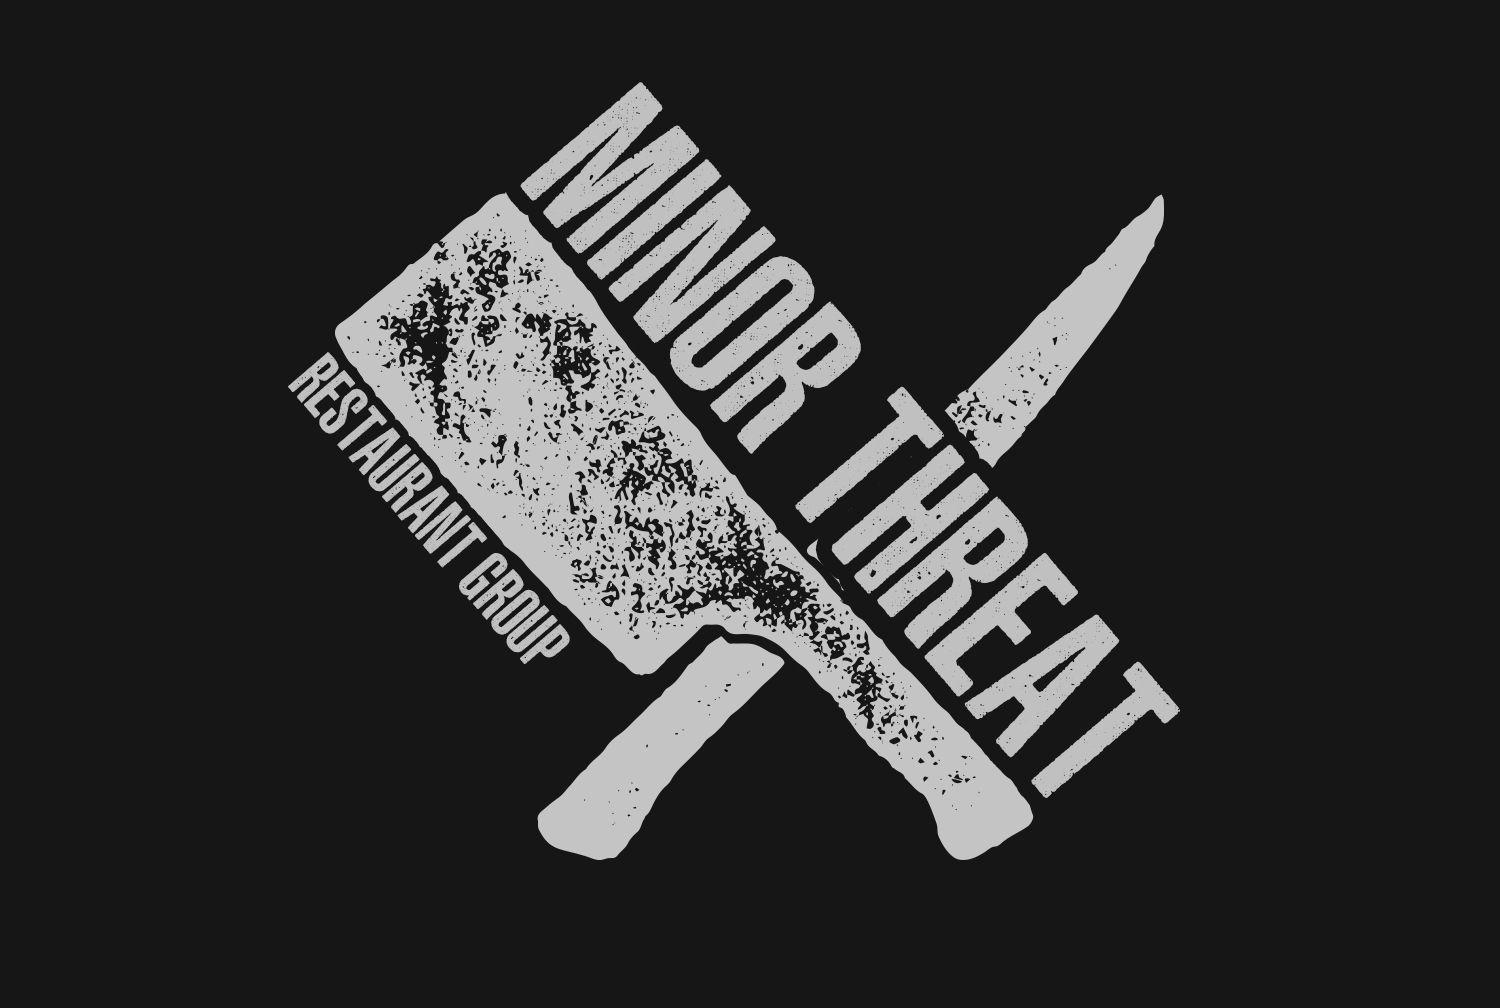 Minor Threat Logo - Minor Threat Restaurant Group – Restaurant Group Suburbs